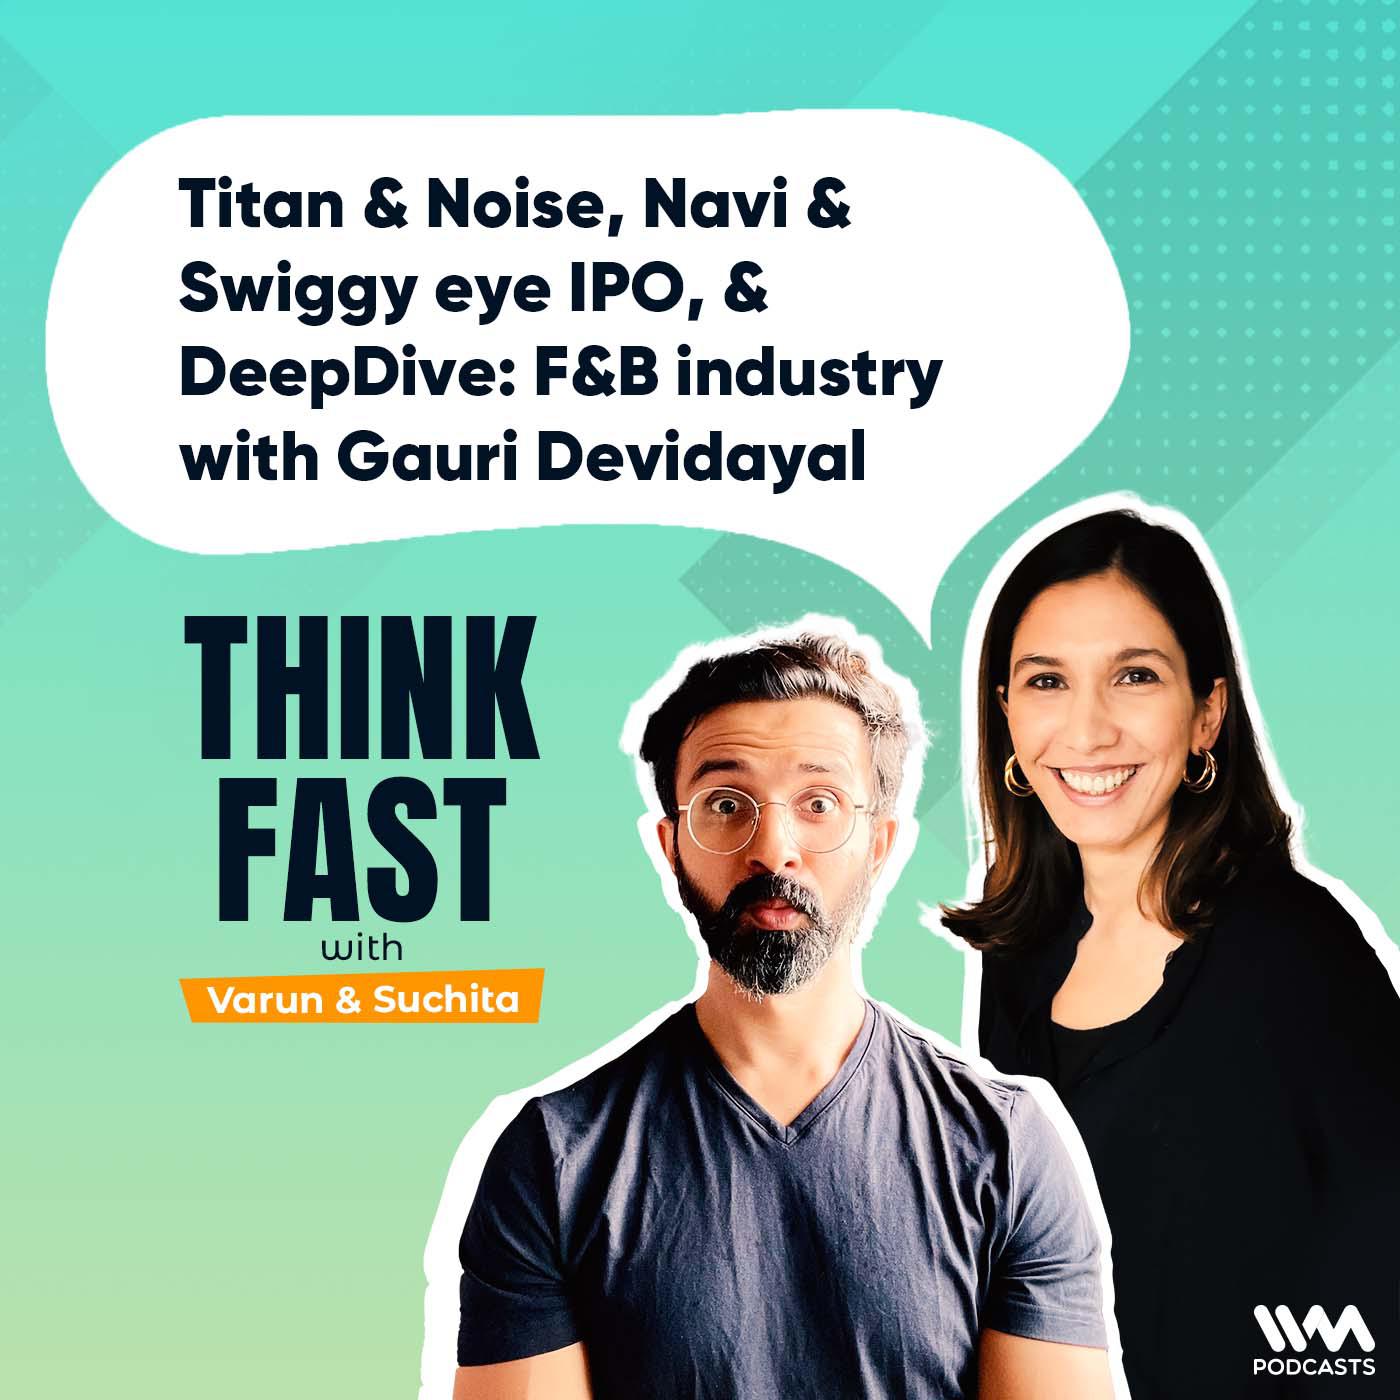 Titan & Noise, Navi & Swiggy eye IPO, & DeepDive: F&B industry with Gauri Devidayal